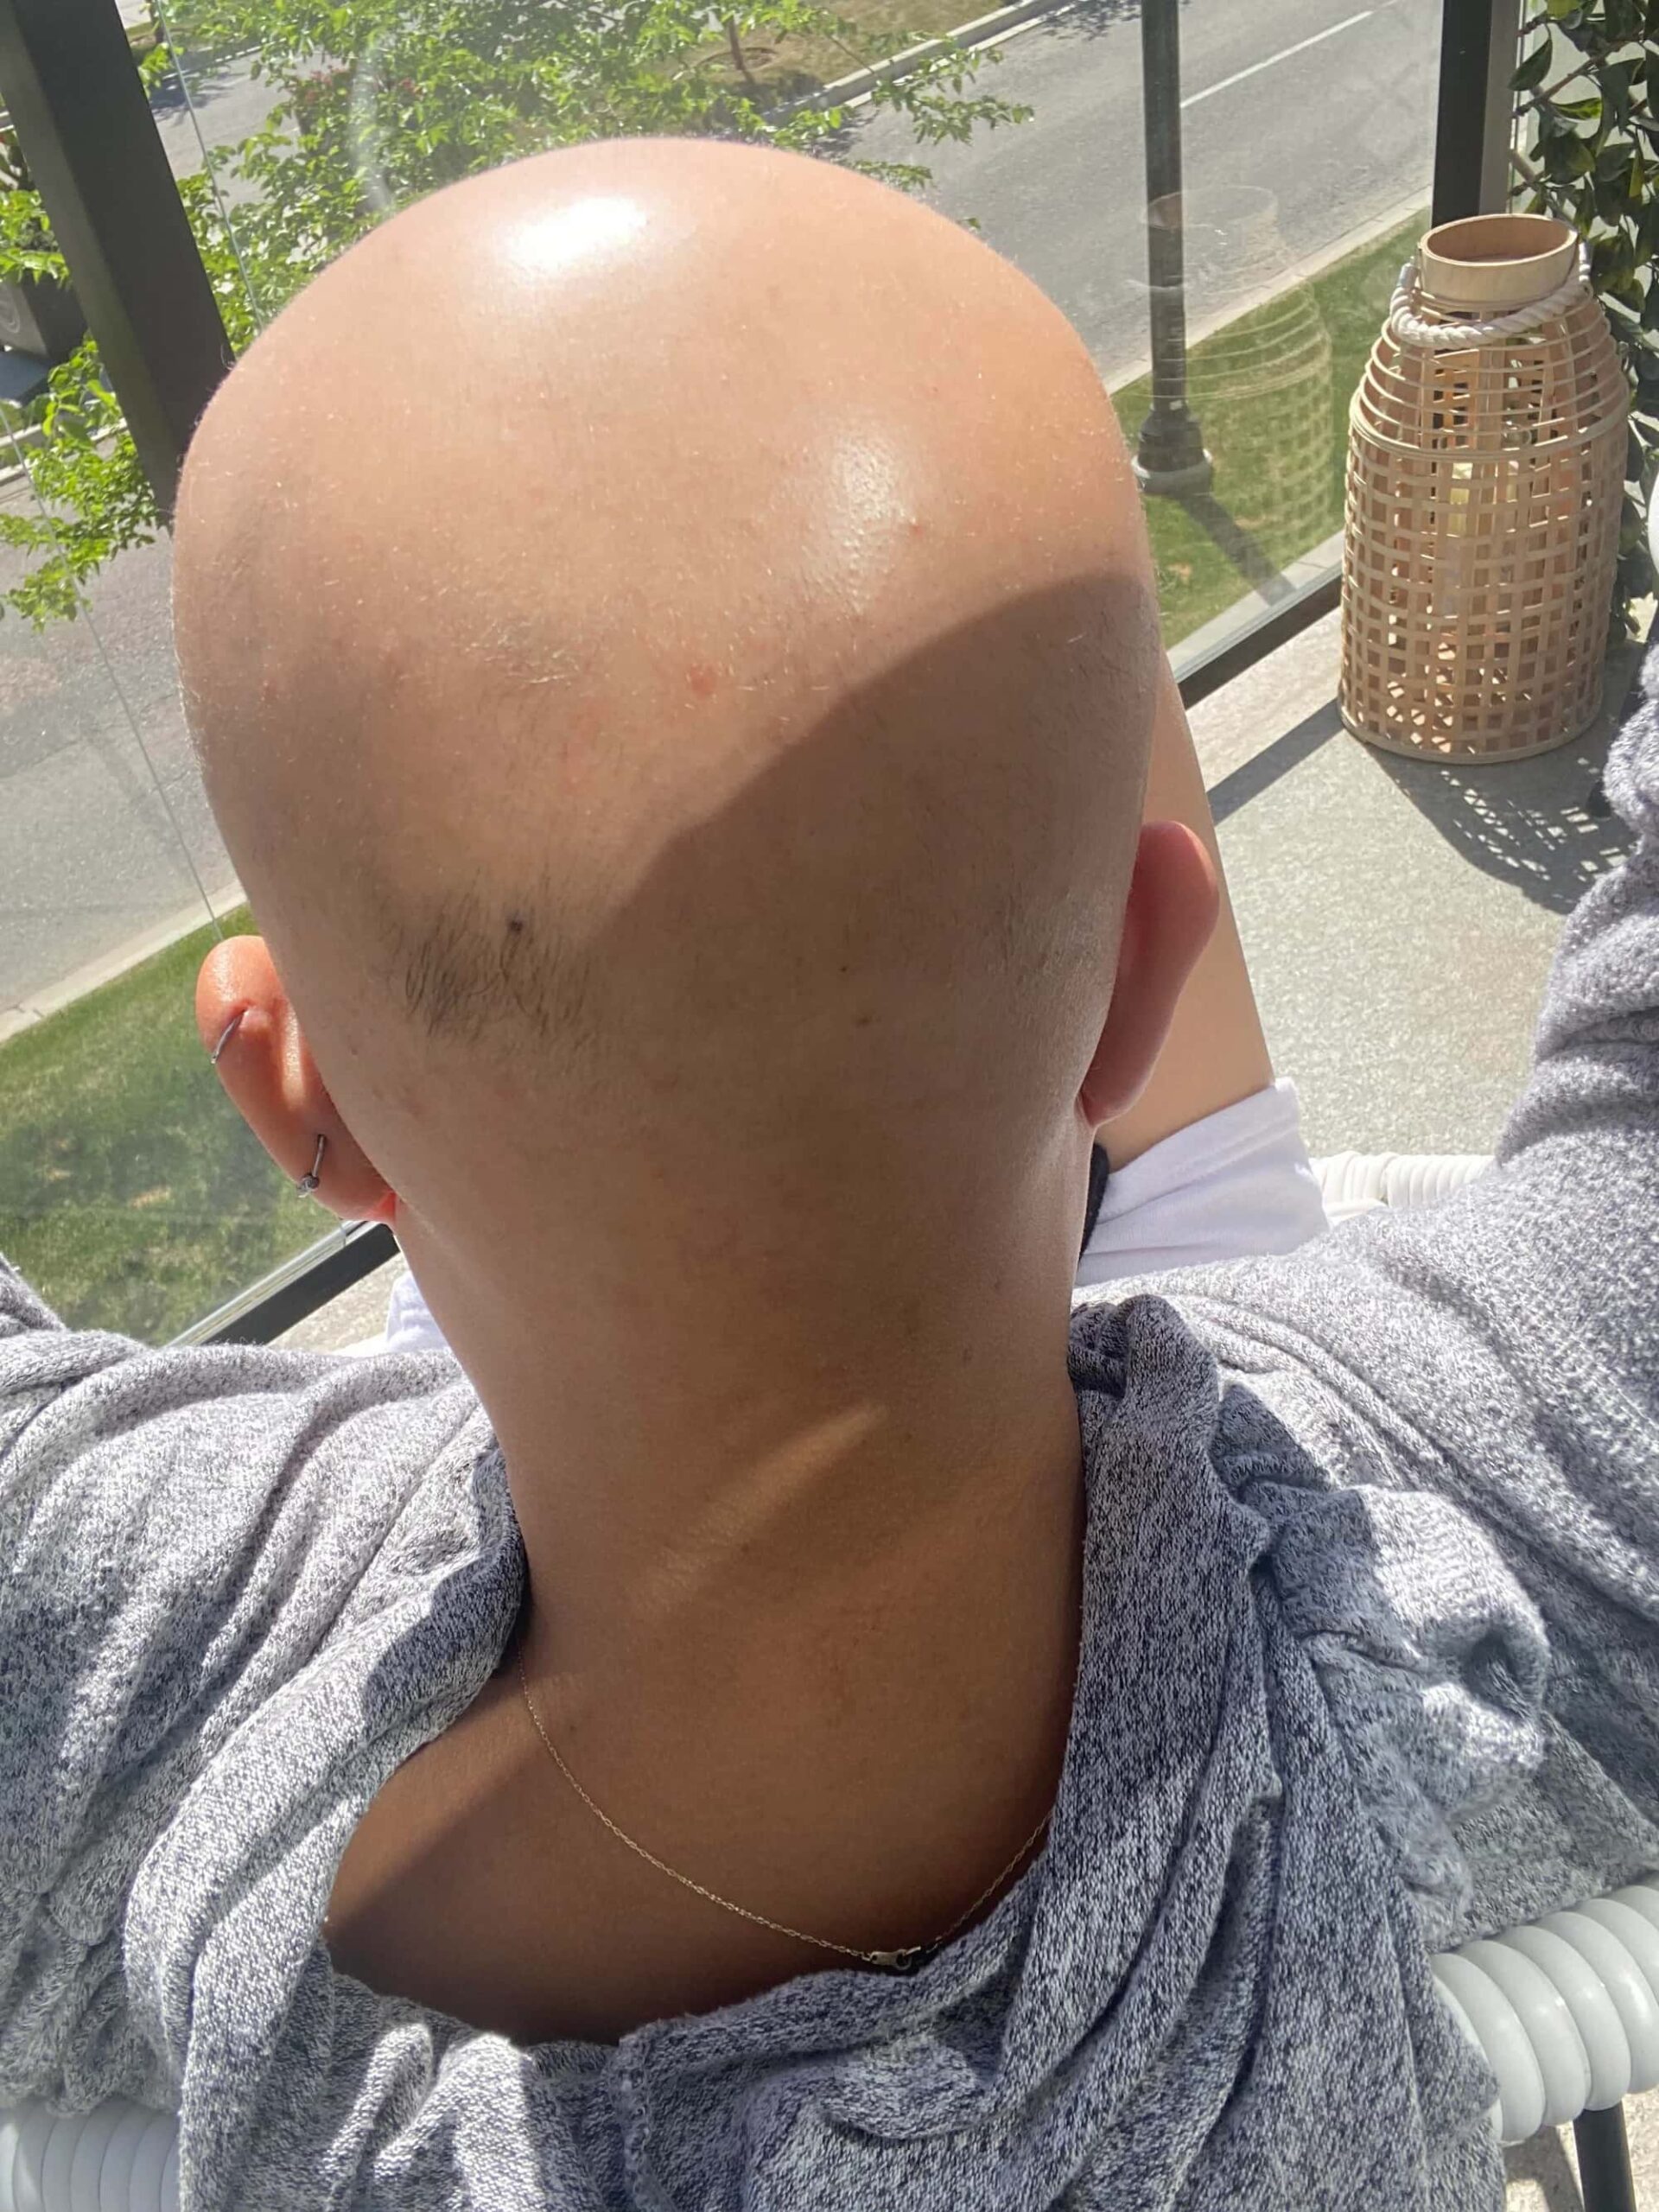 deuruxolitinib alopecia areata results 05 scaled - Alopecia Areata Treatment: What Future Holds